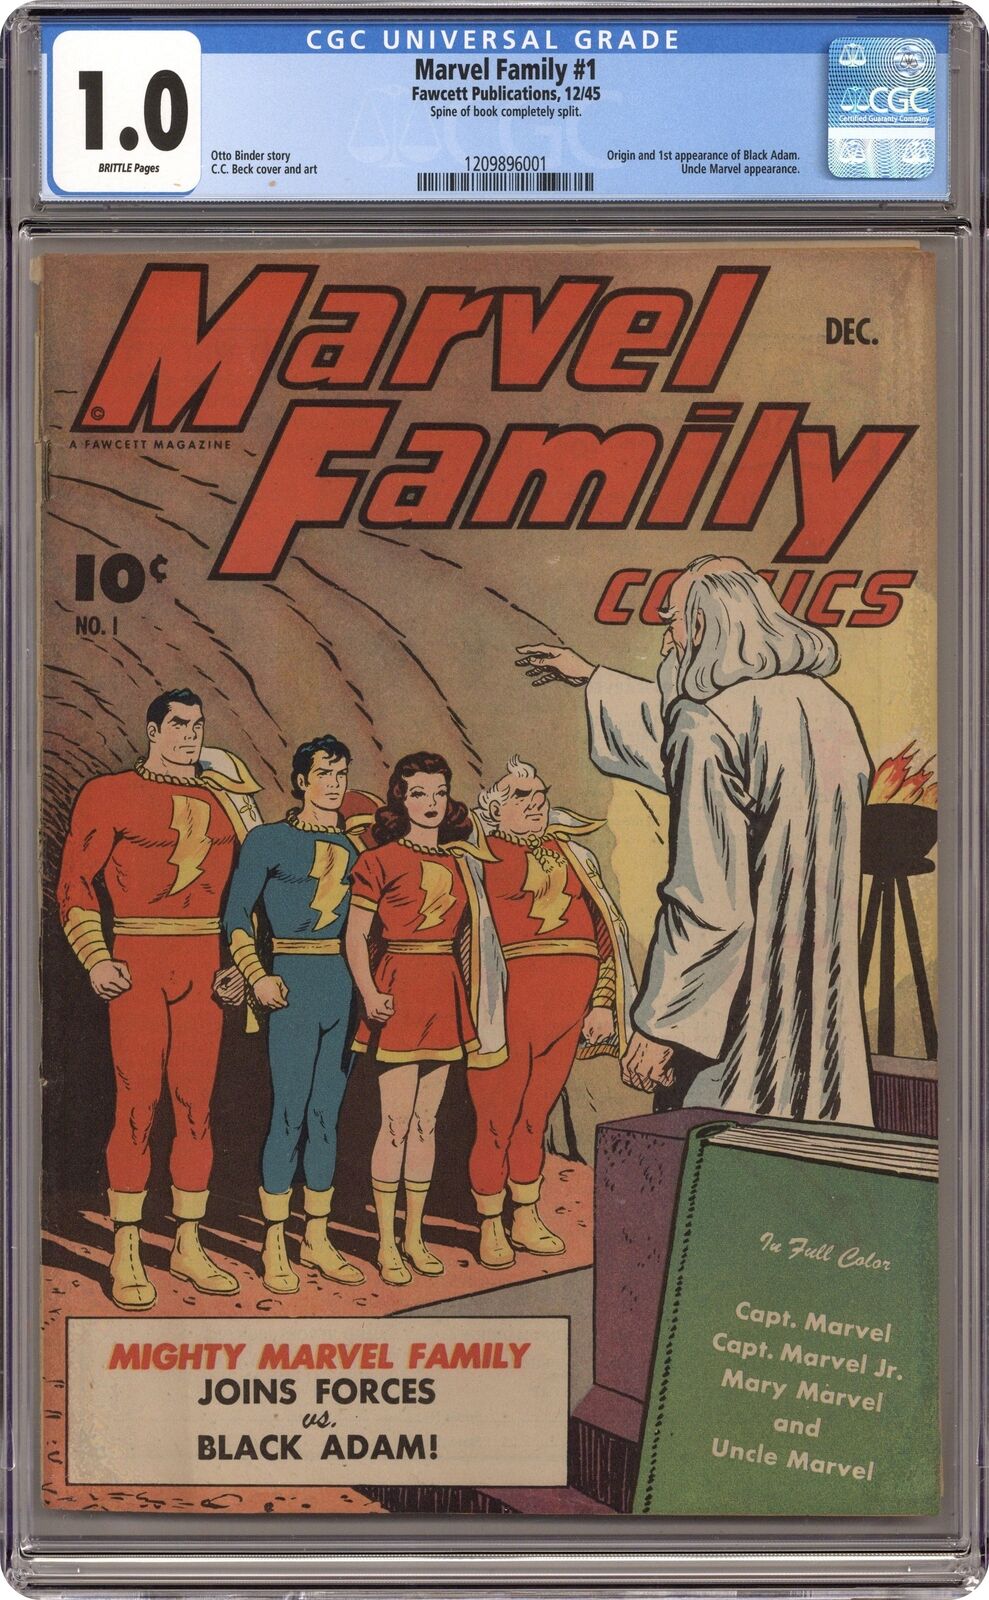 Marvel Family #1 CGC 1.0 1945 1209896001 1st app. Black Adam